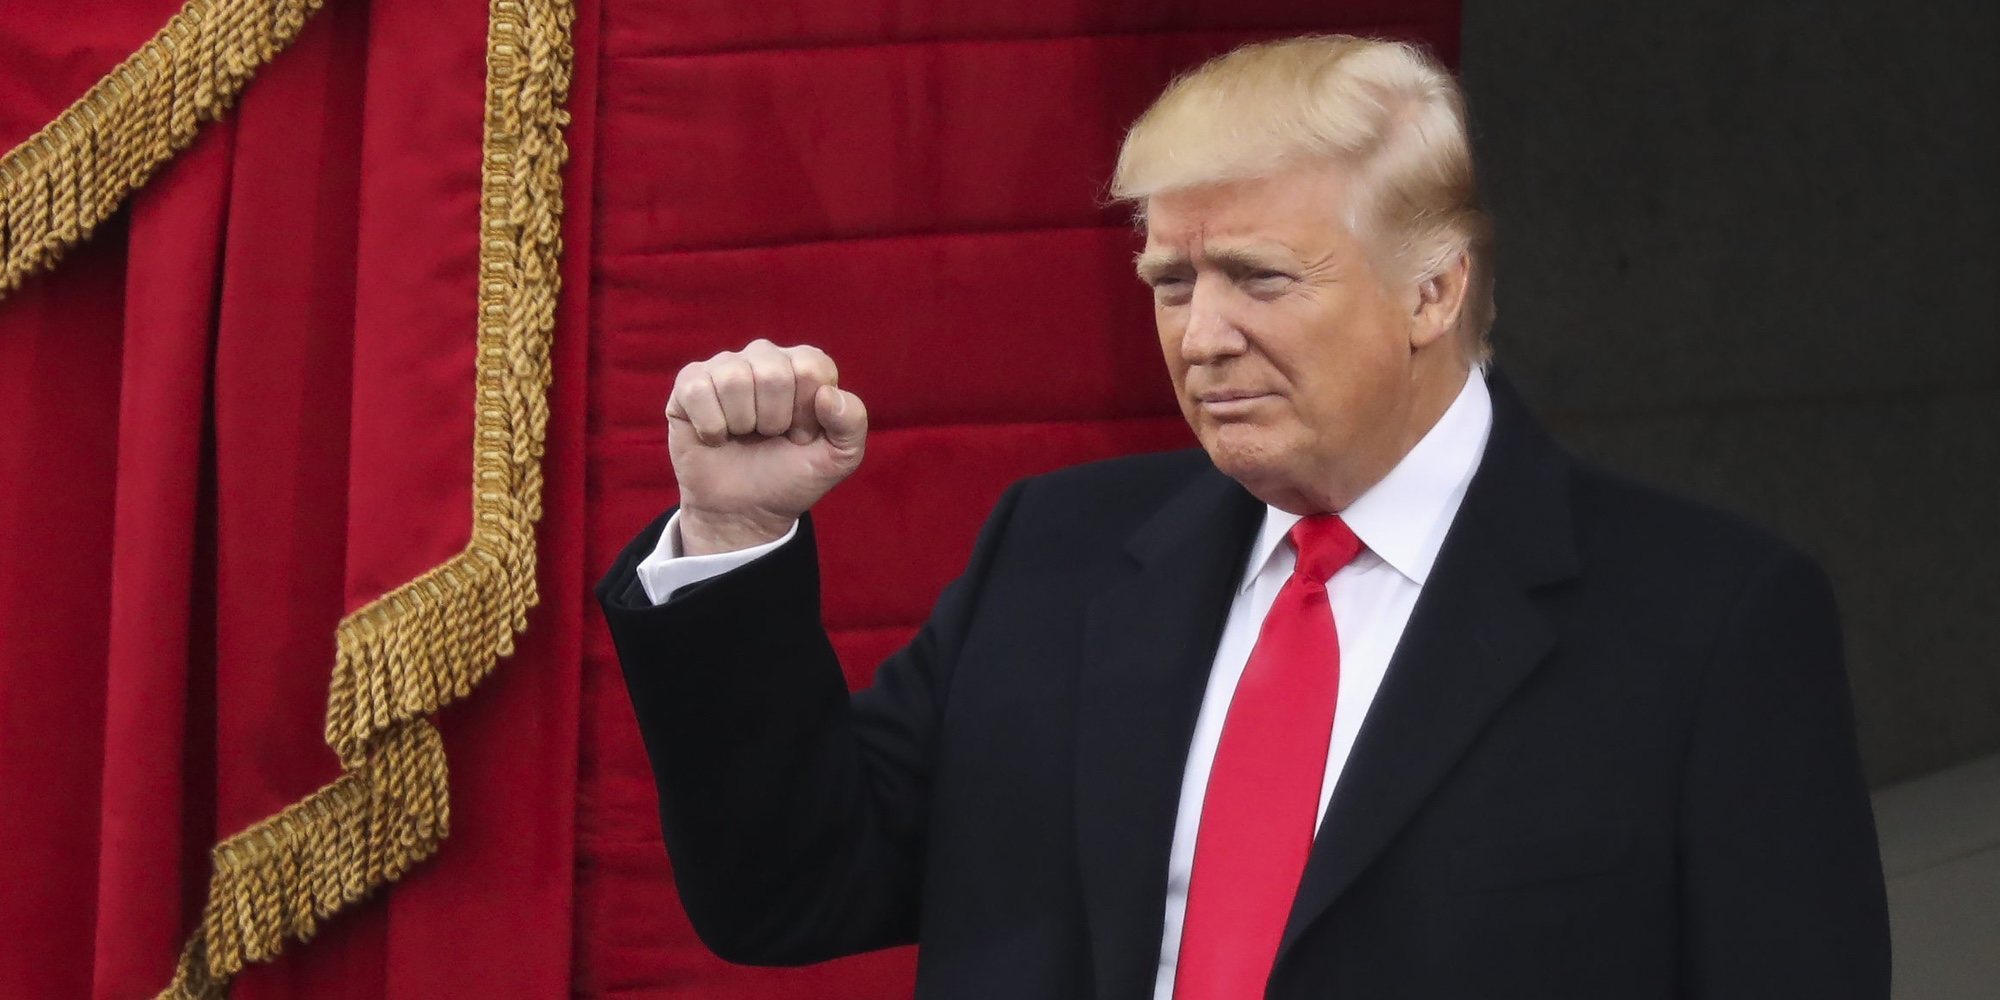 Donald Trump se toma a risa su impeachment: "Me lo estoy pasando bien"